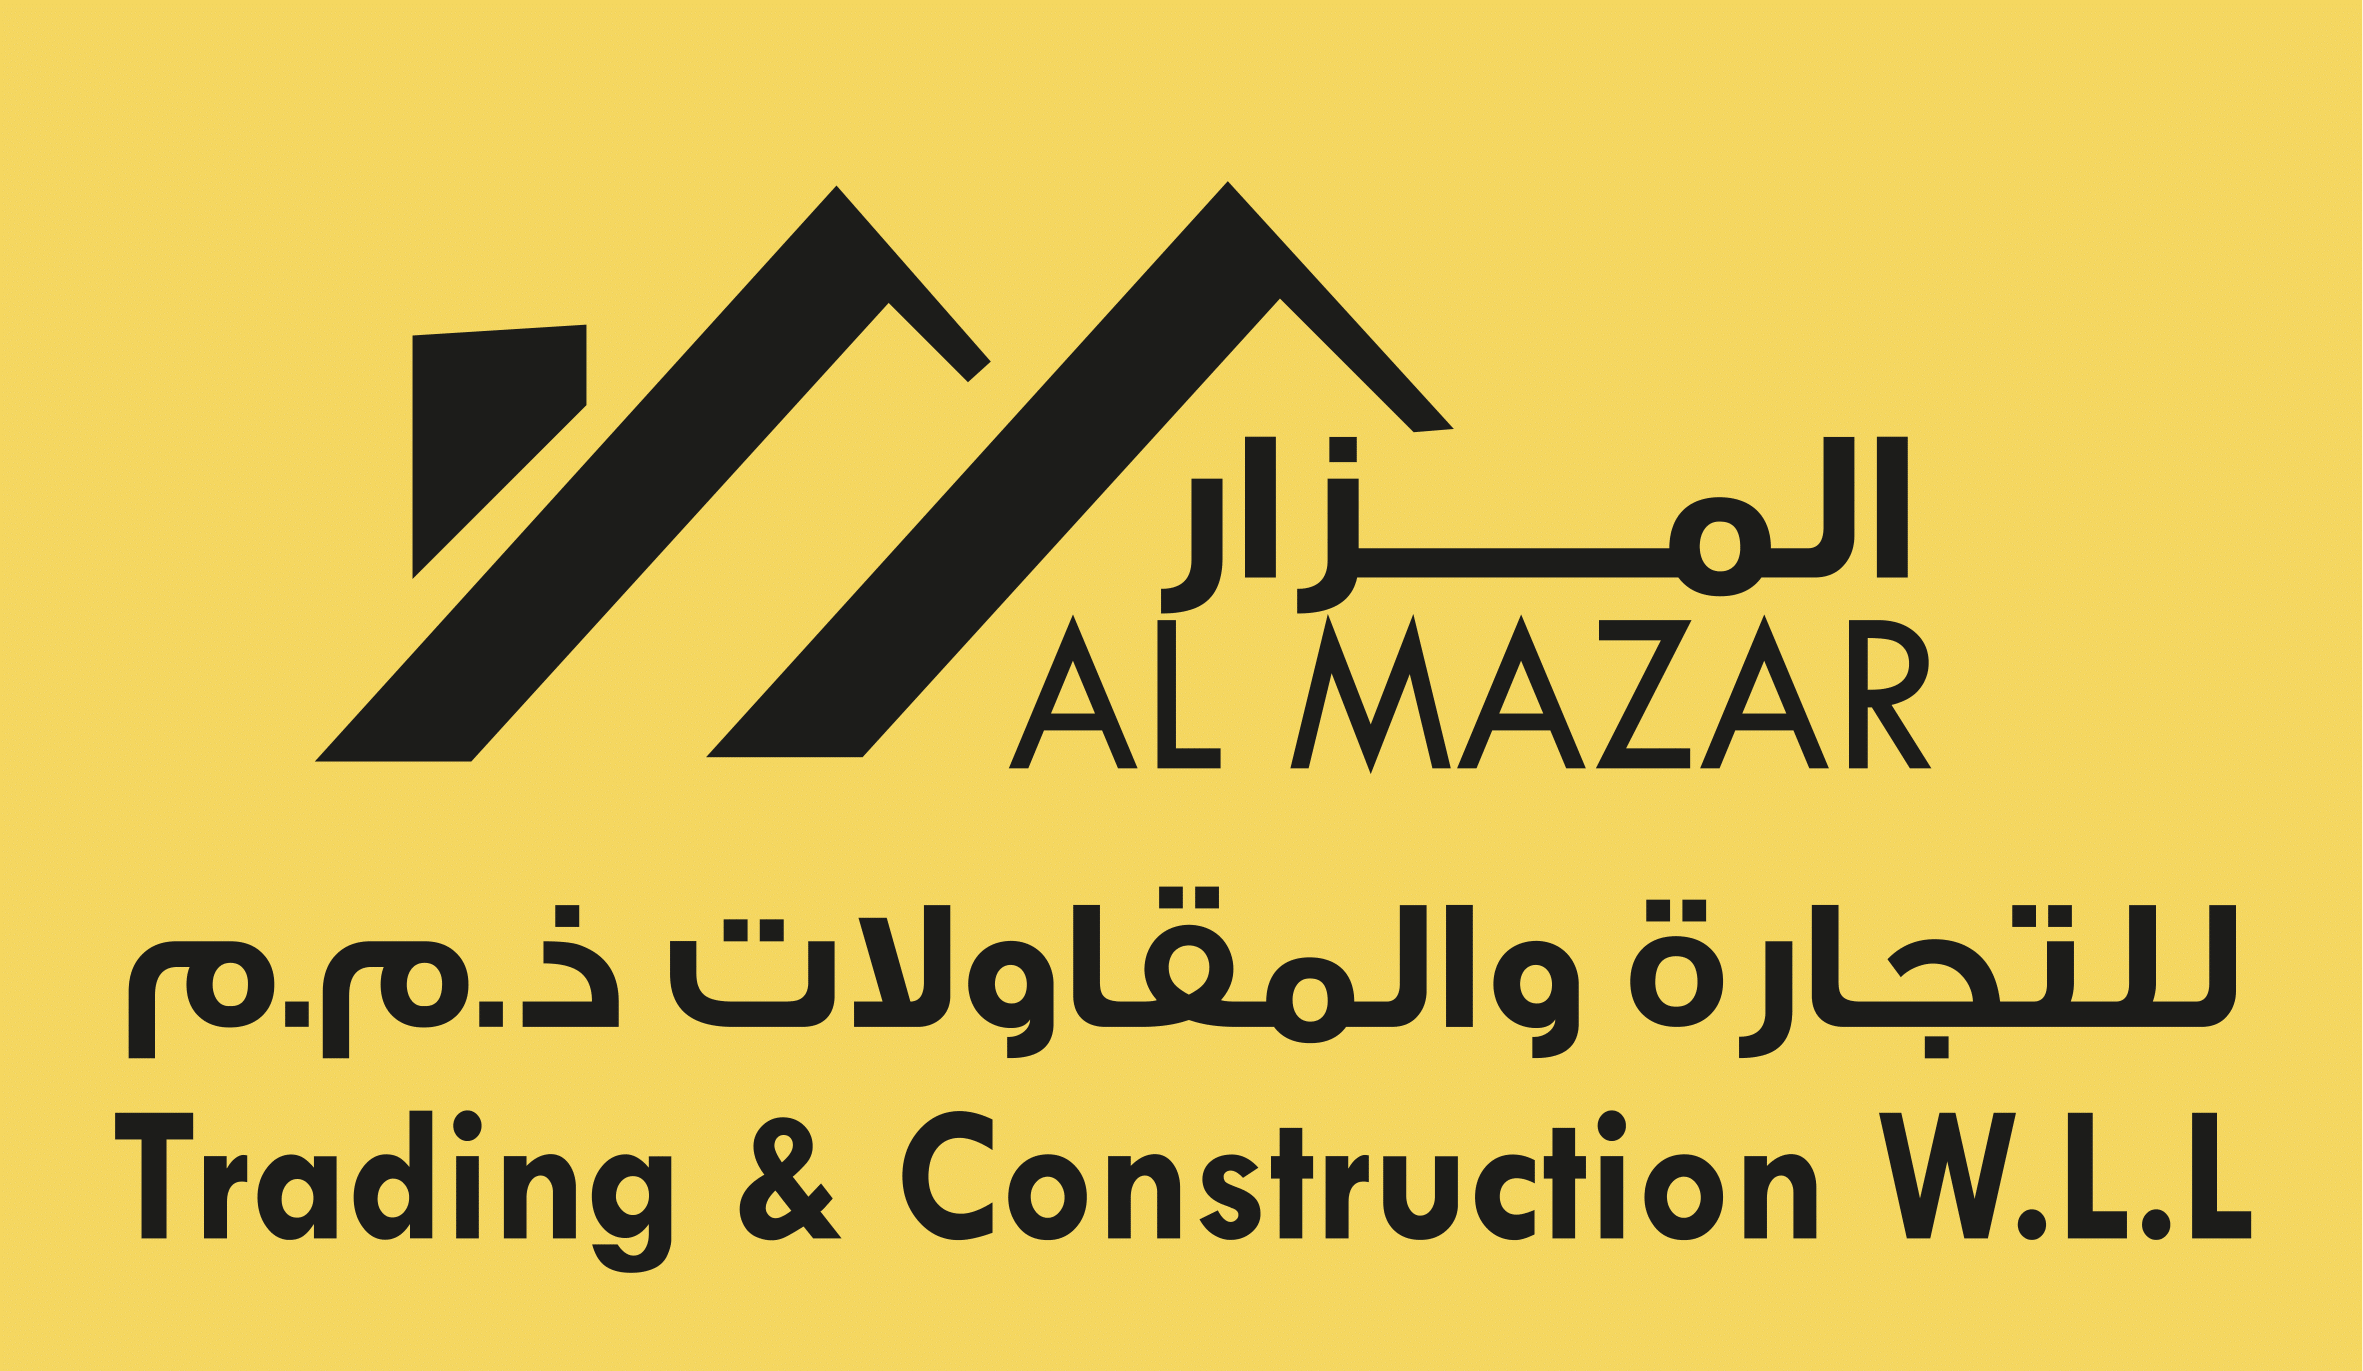 21 - City Plaza - Al Mazar Trading & Construction W.L.L